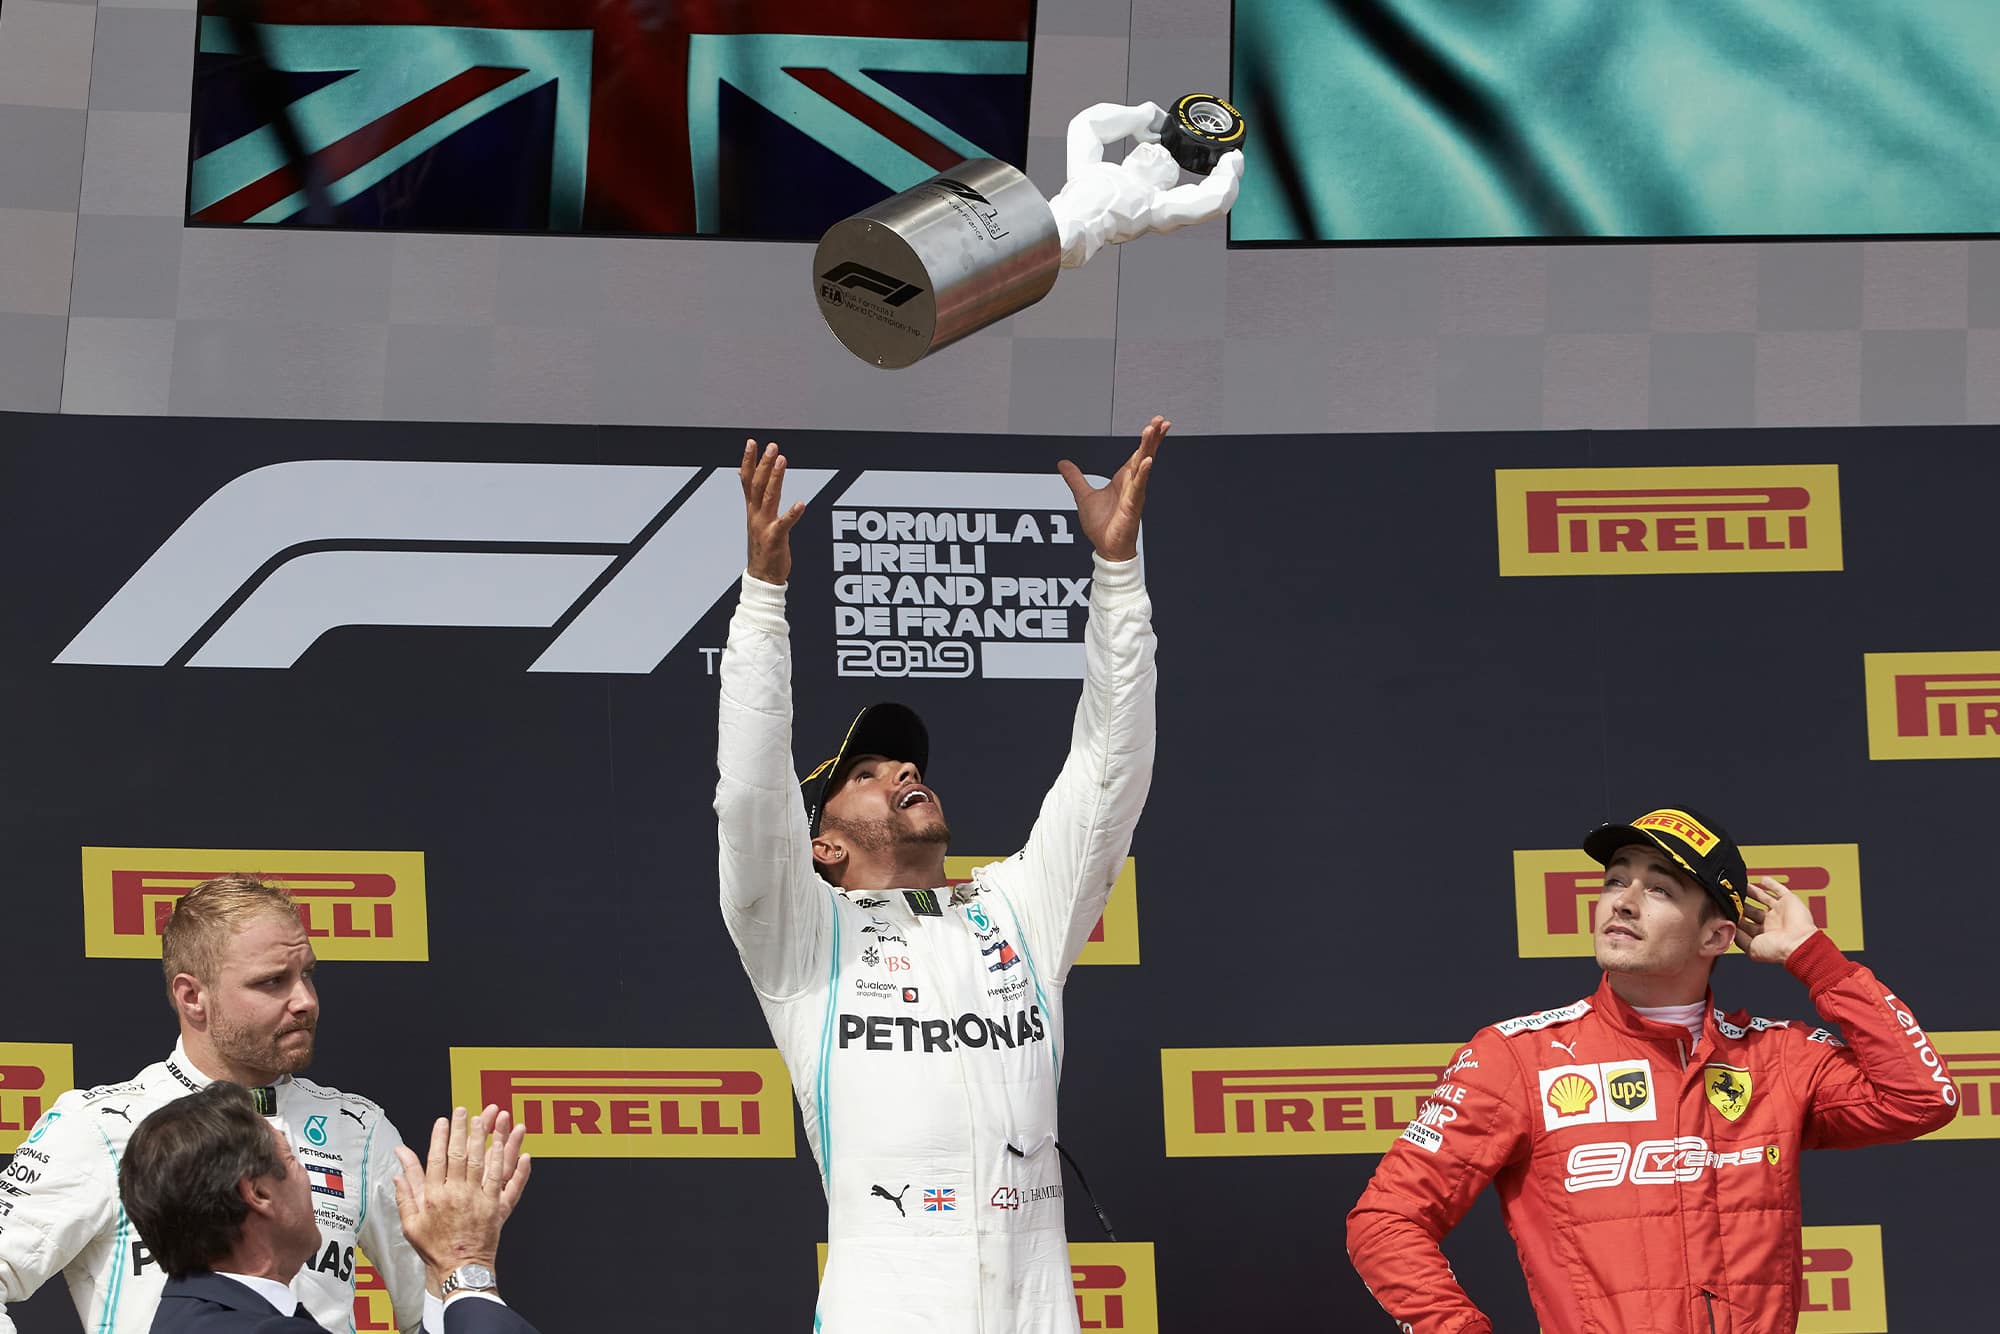 Lewis Hamilton celebrates winning the 2019 French Grand Prix